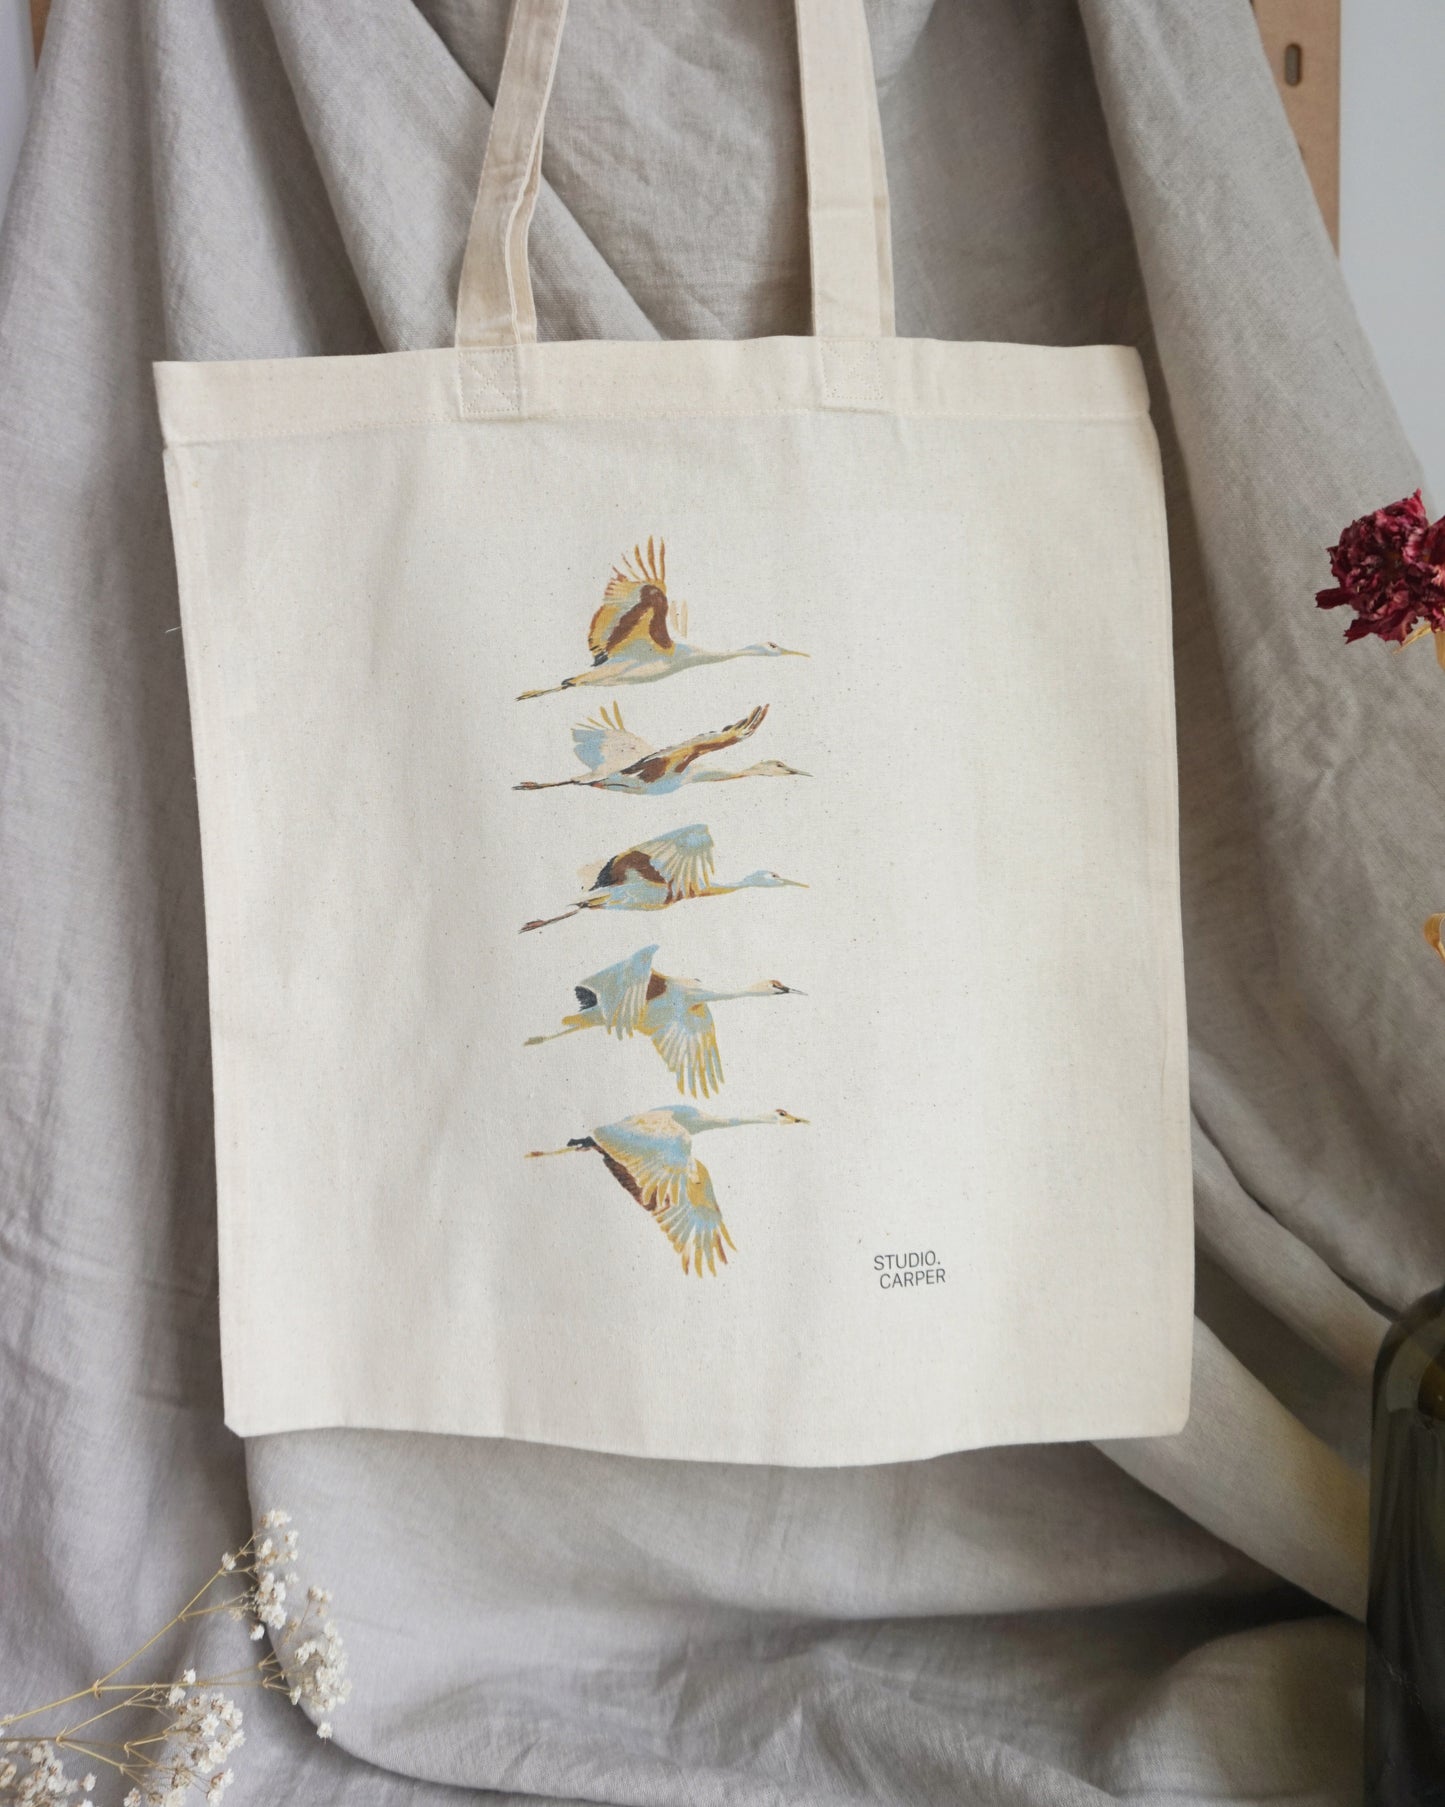 'Free bird' Tote bag